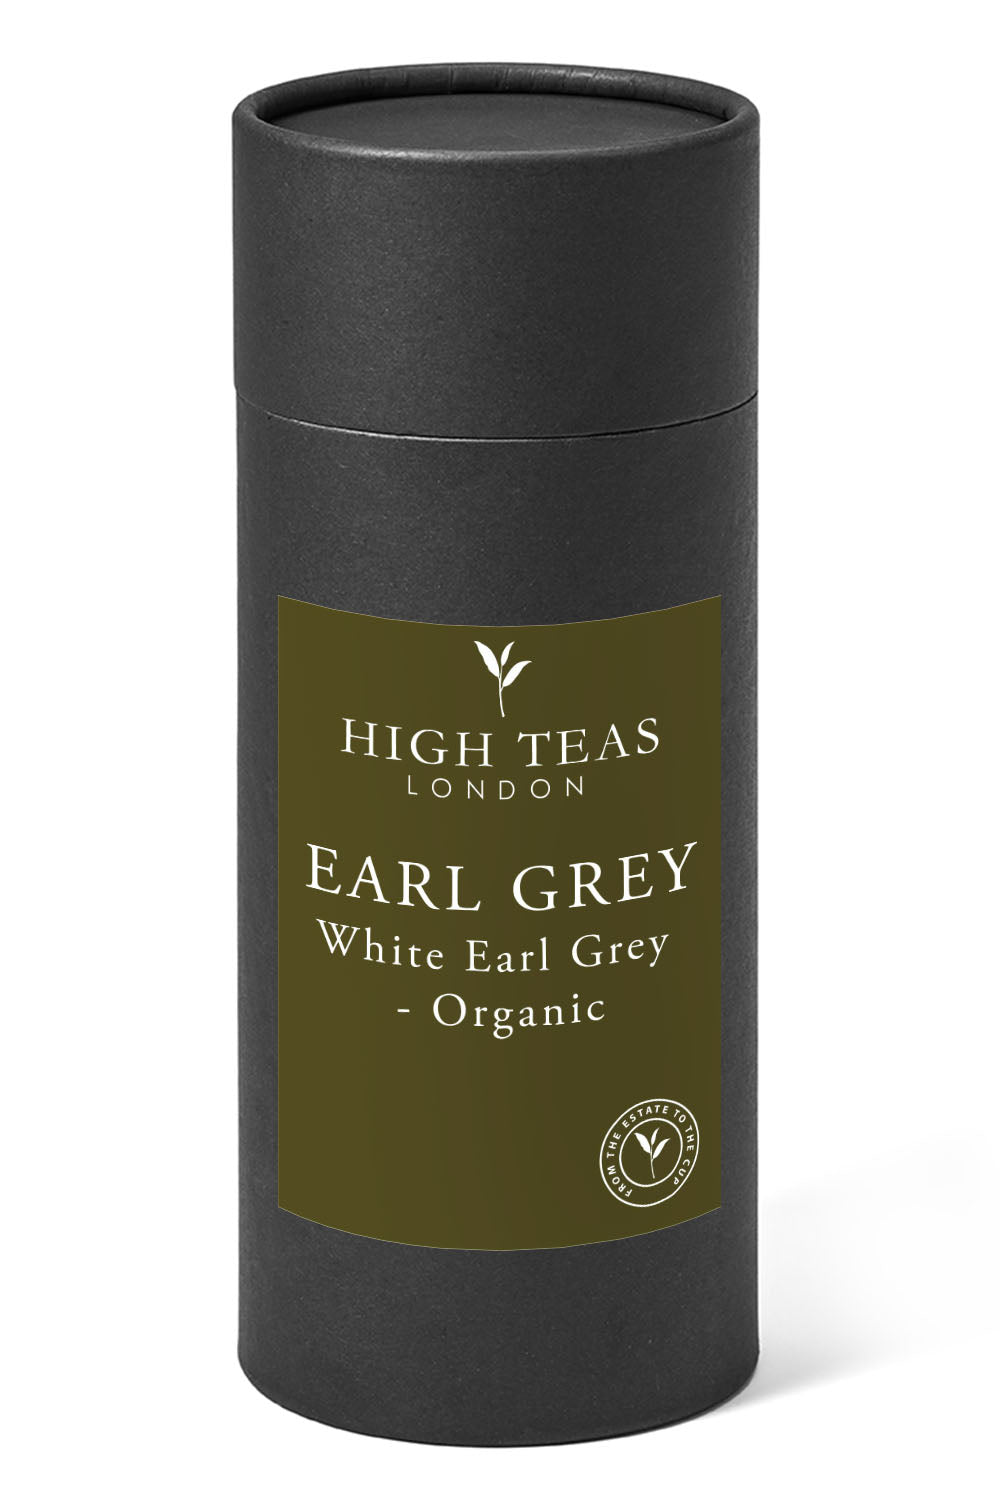 White Earl Grey - Organic-150g gift-Loose Leaf Tea-High Teas